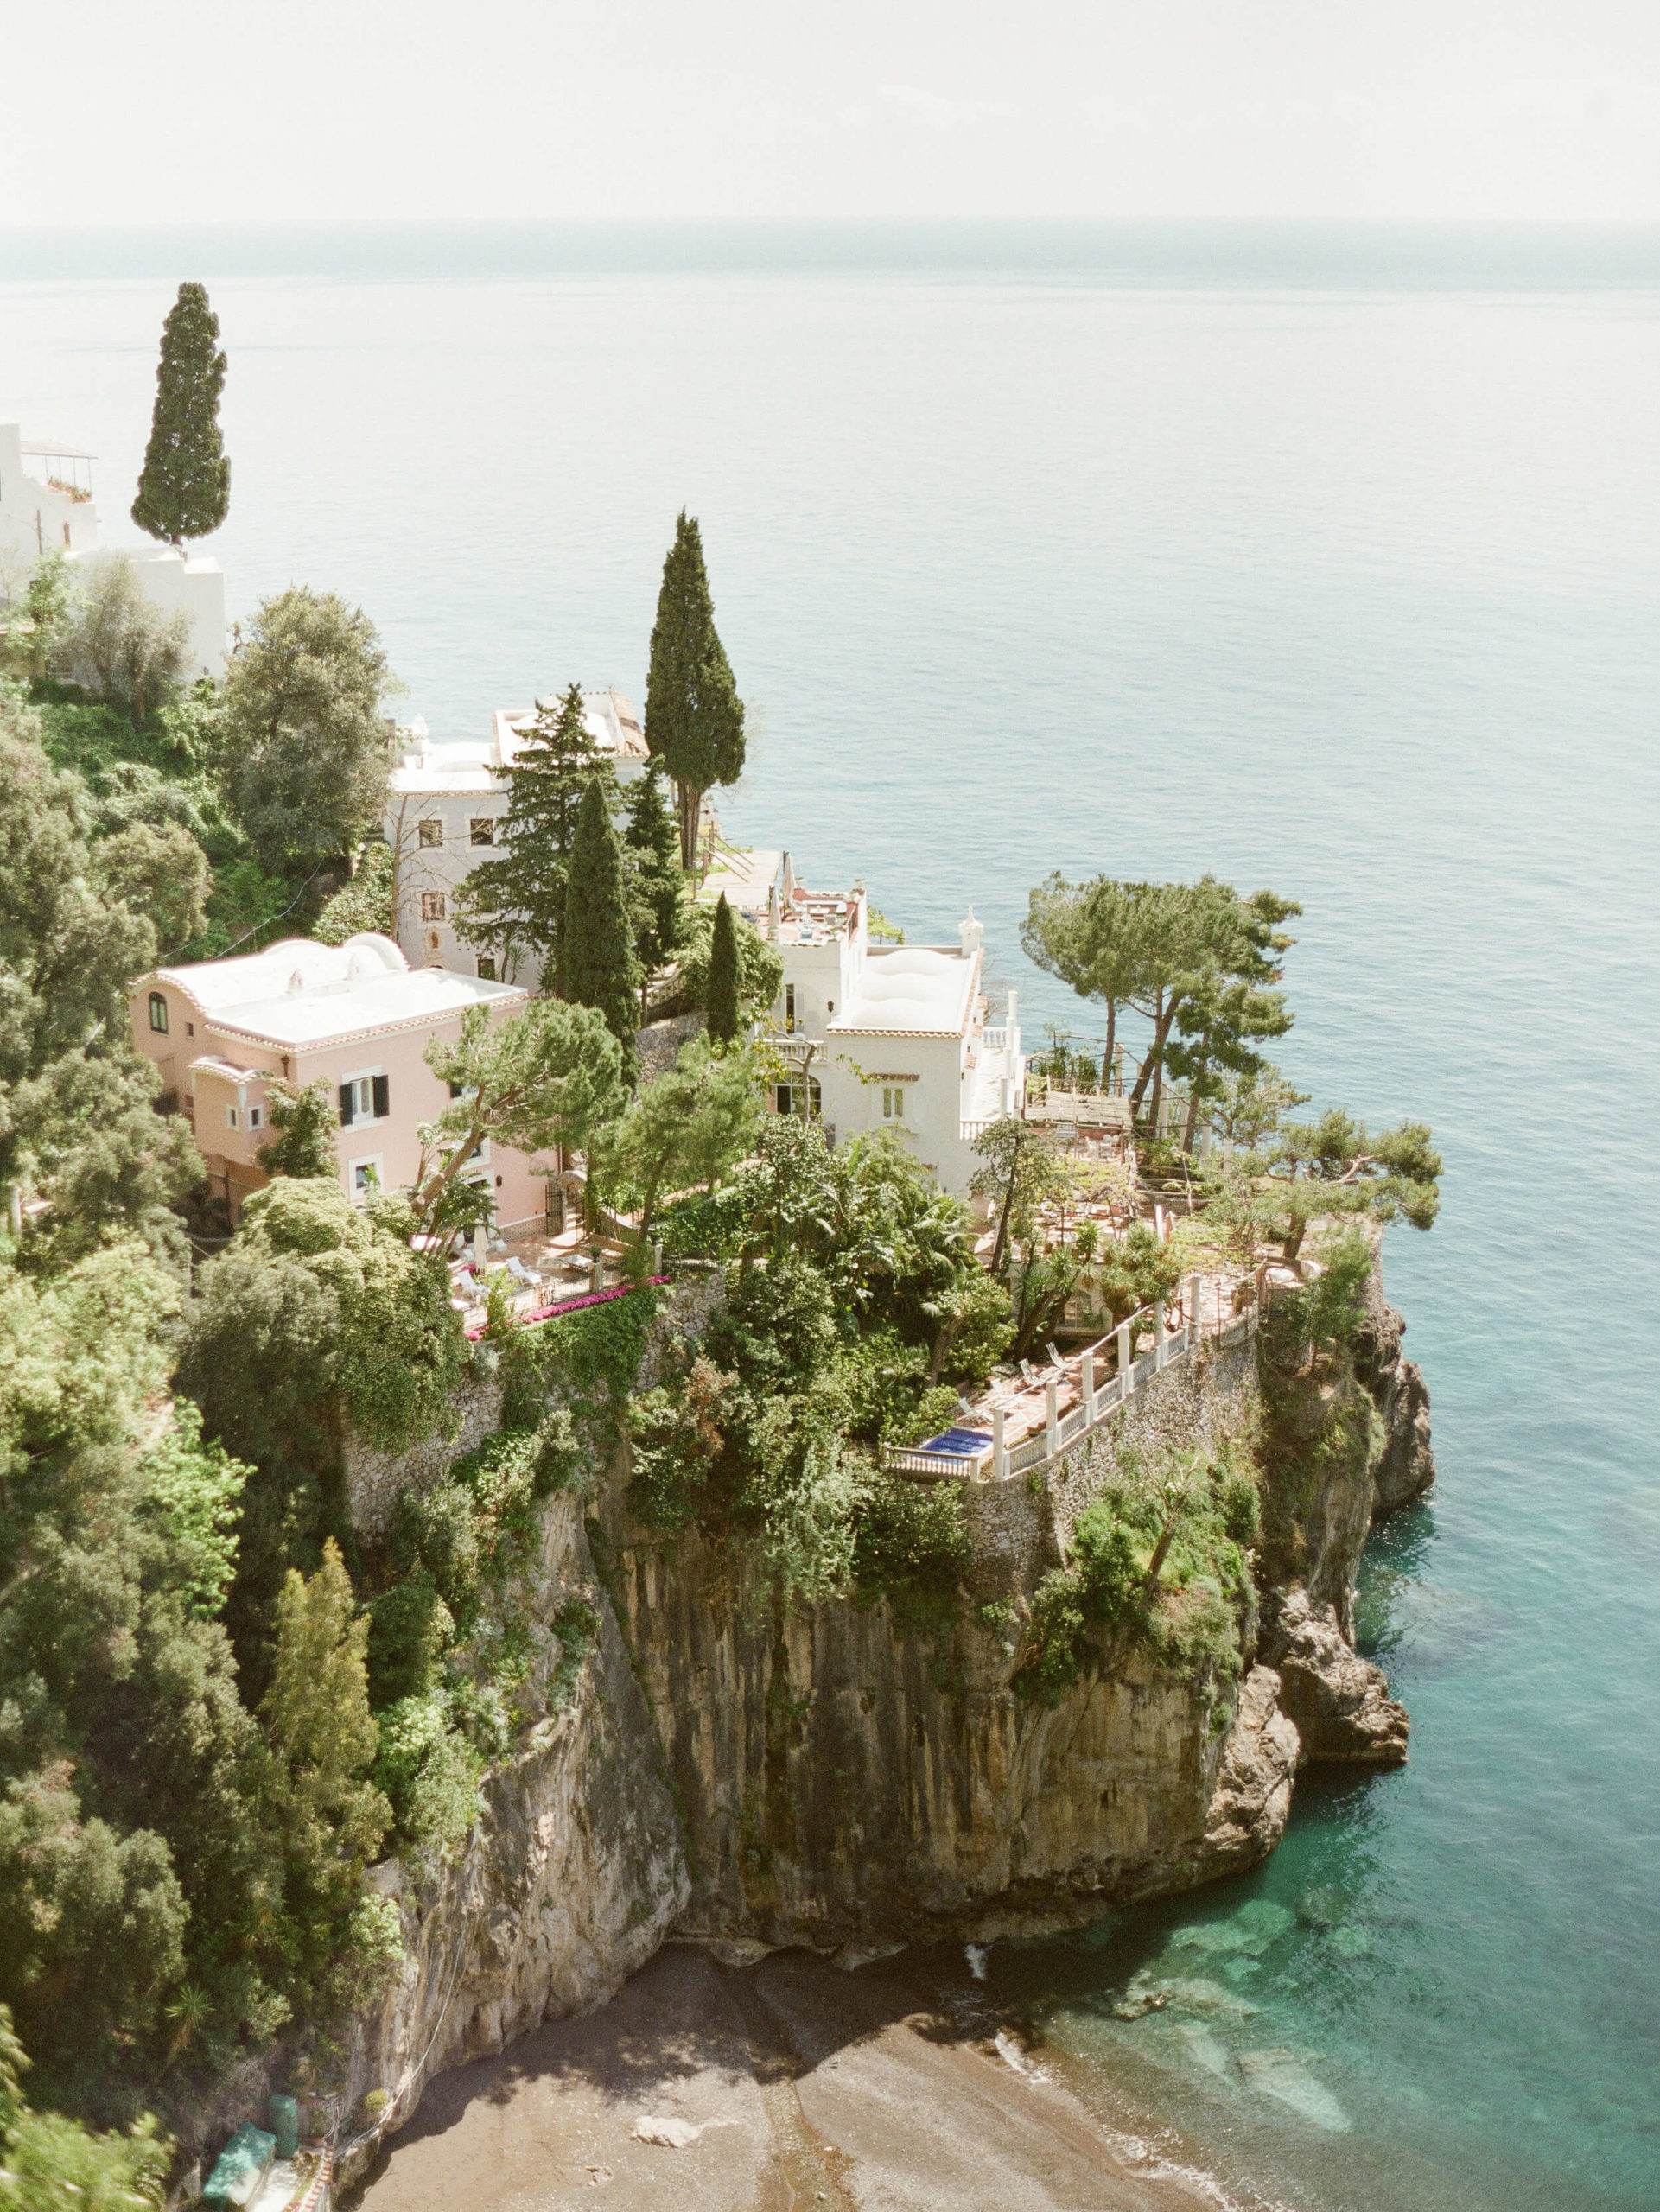 Cliffside with houses on the Amalfi Coast